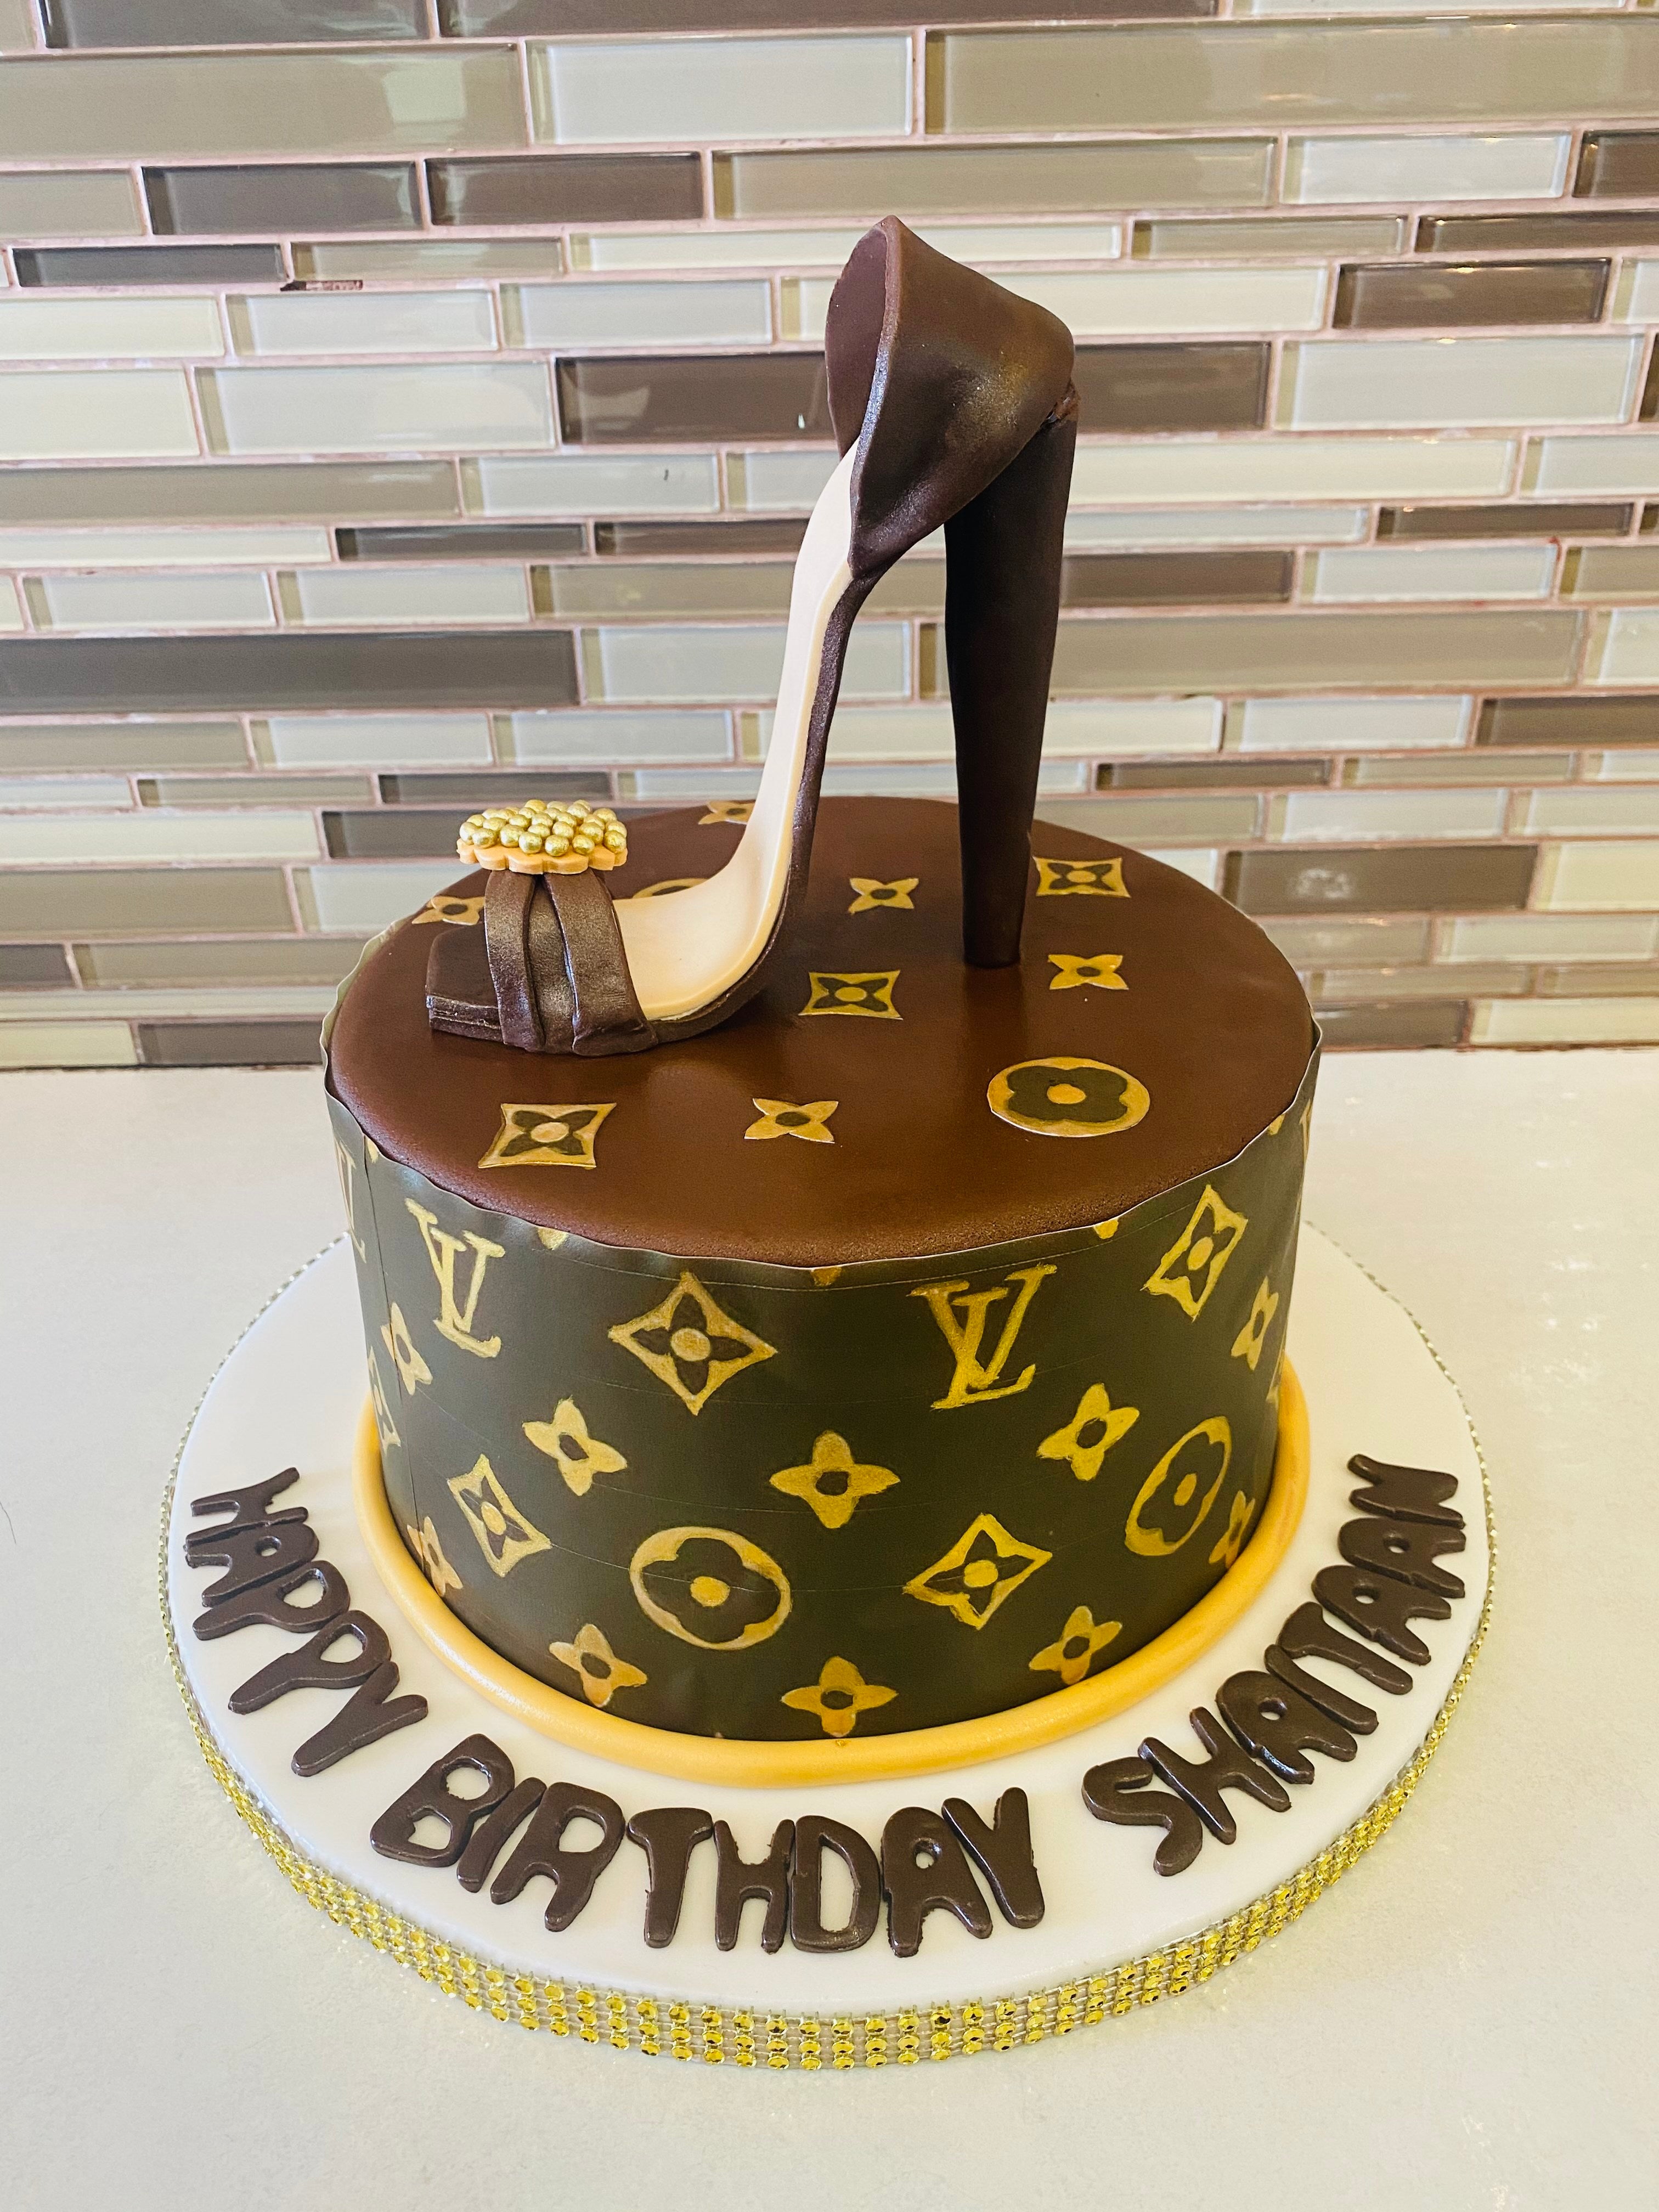 made FRESH daily: Louboutin and Louis Vuitton Birthday Cake!